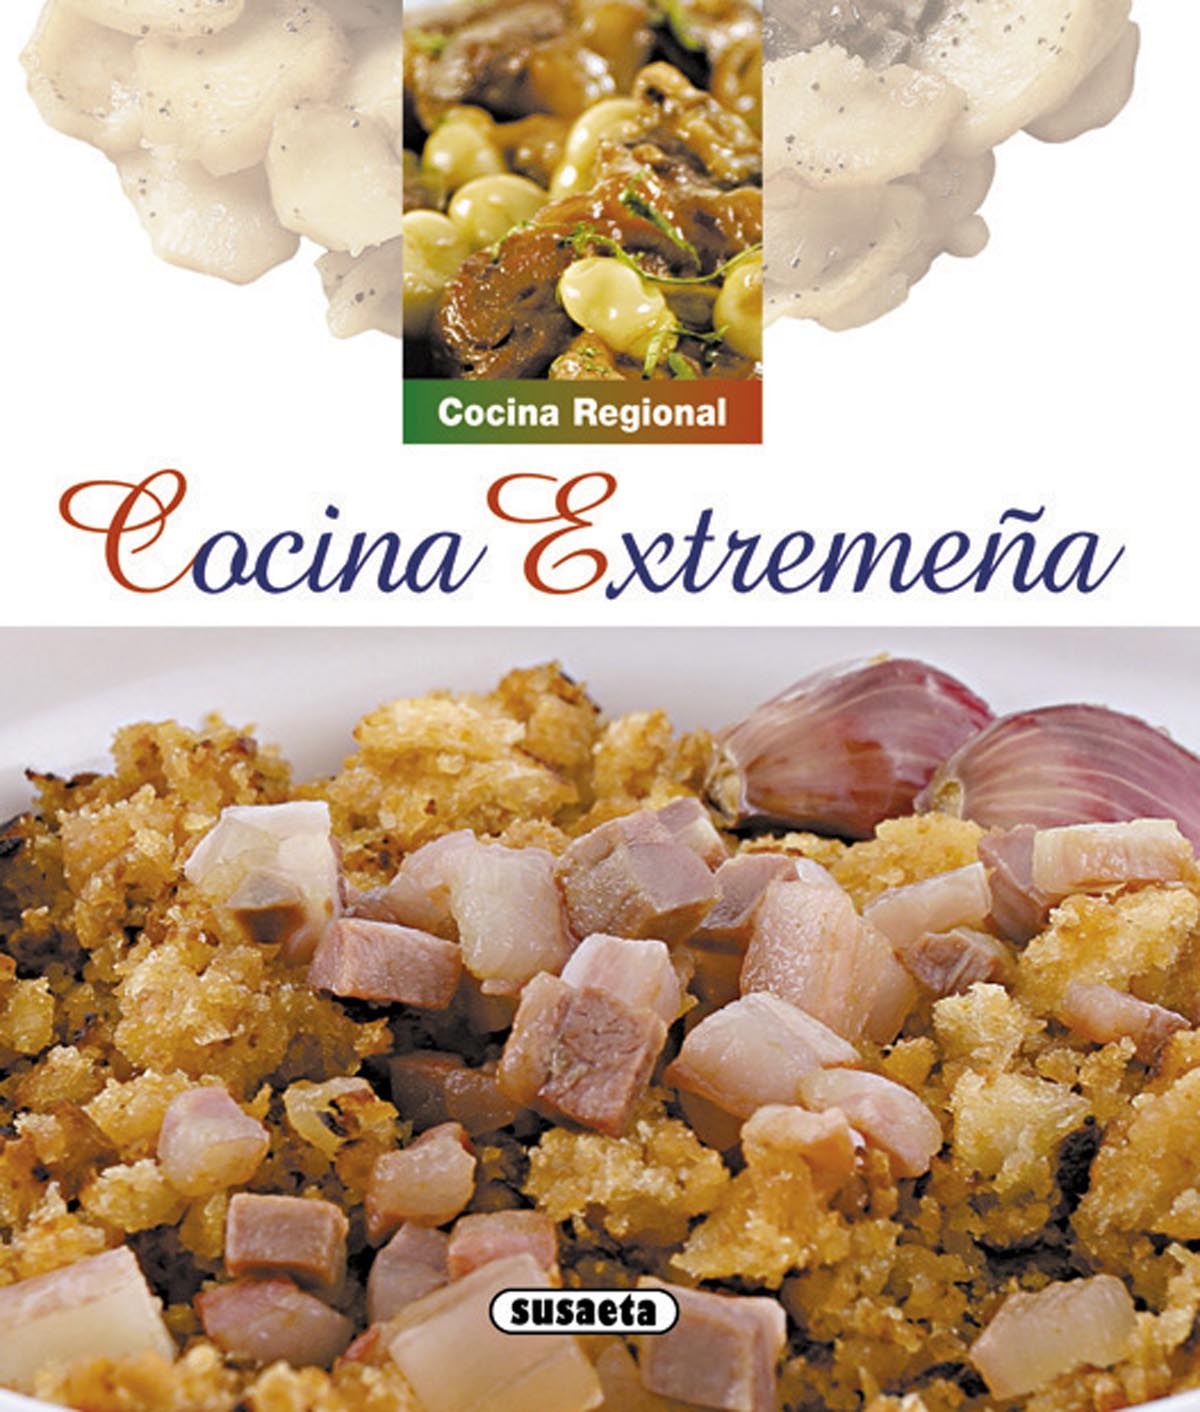 Cocina extremeña - Susaeta, Equipo